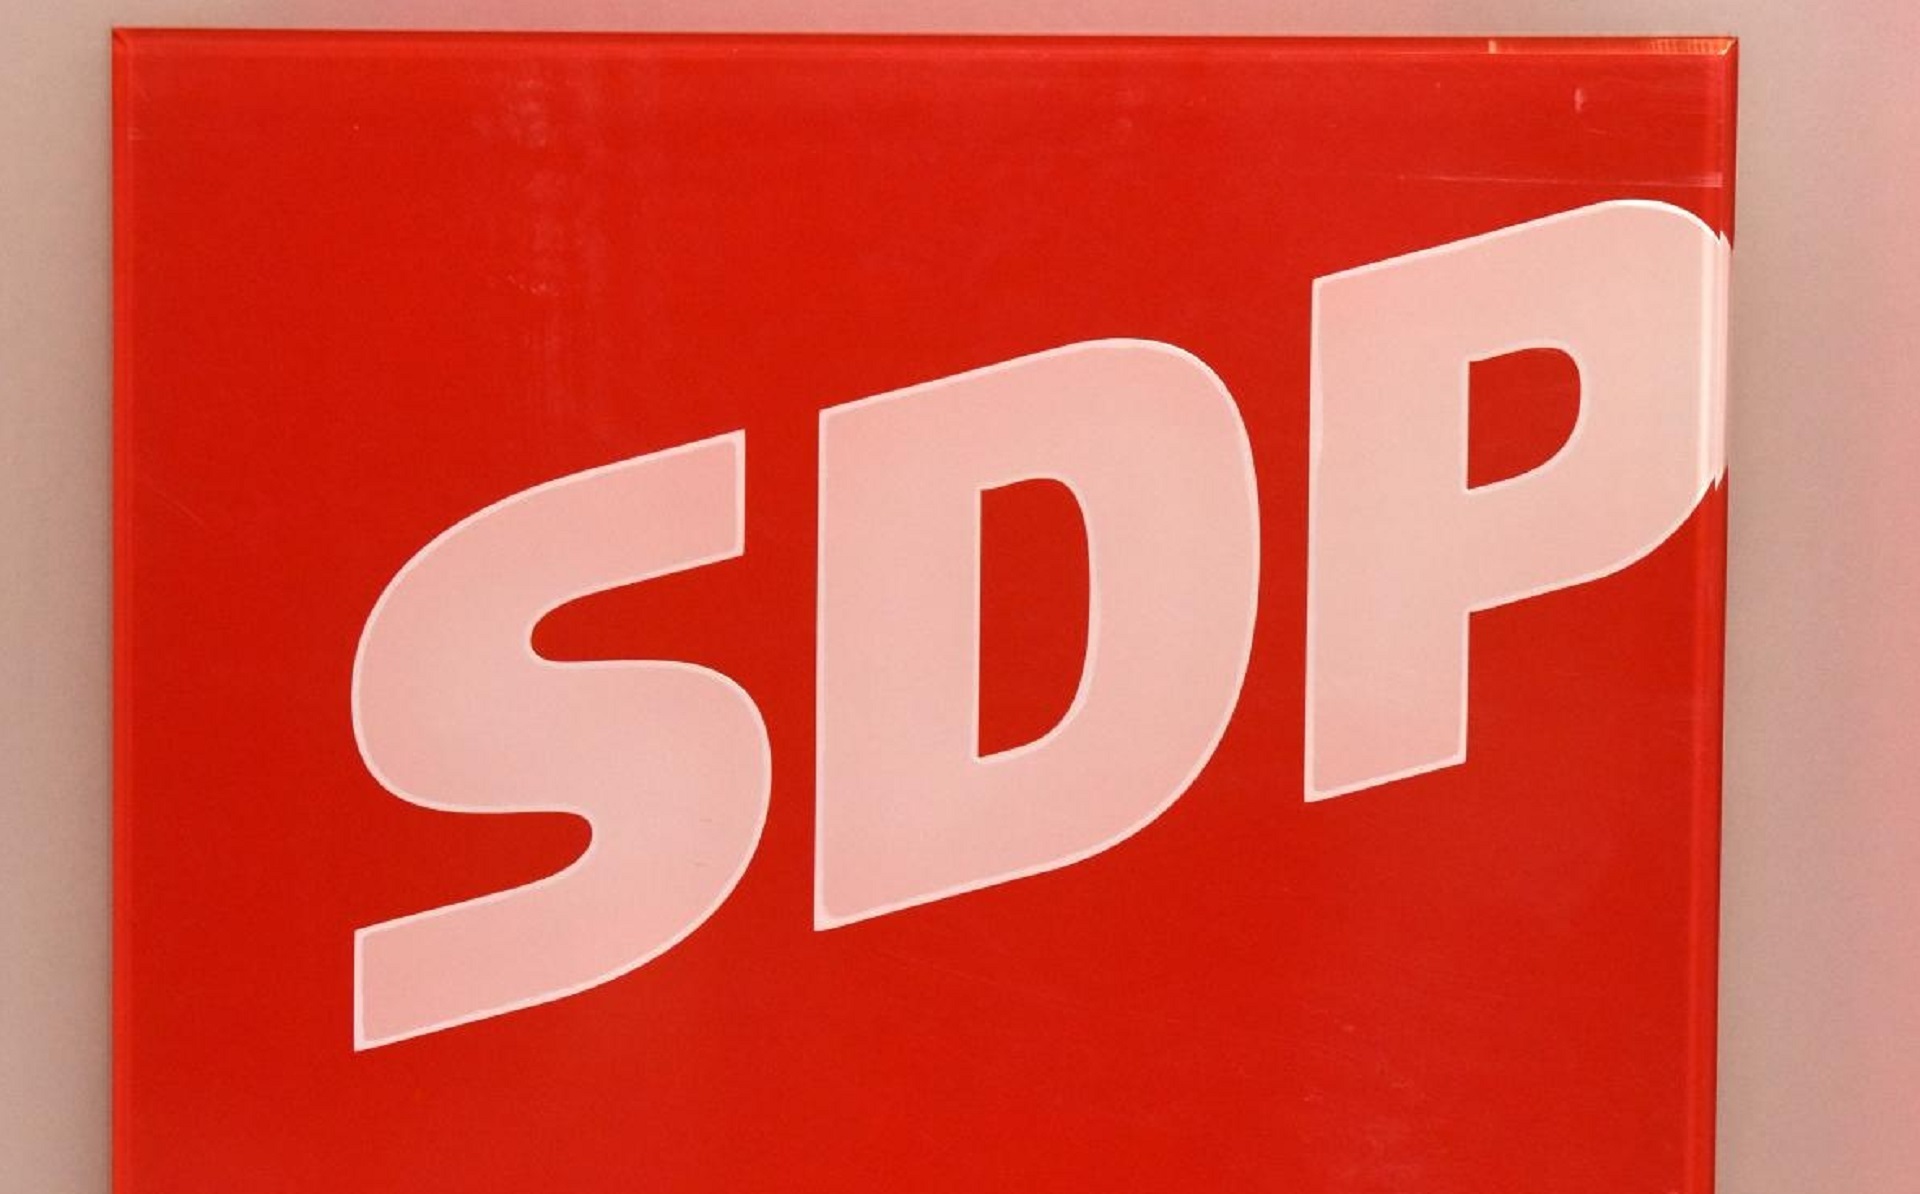 24.04.2018., Sibenik - Logo SDP-a. Photo: Hrvoje Jelavic/PIXSELL